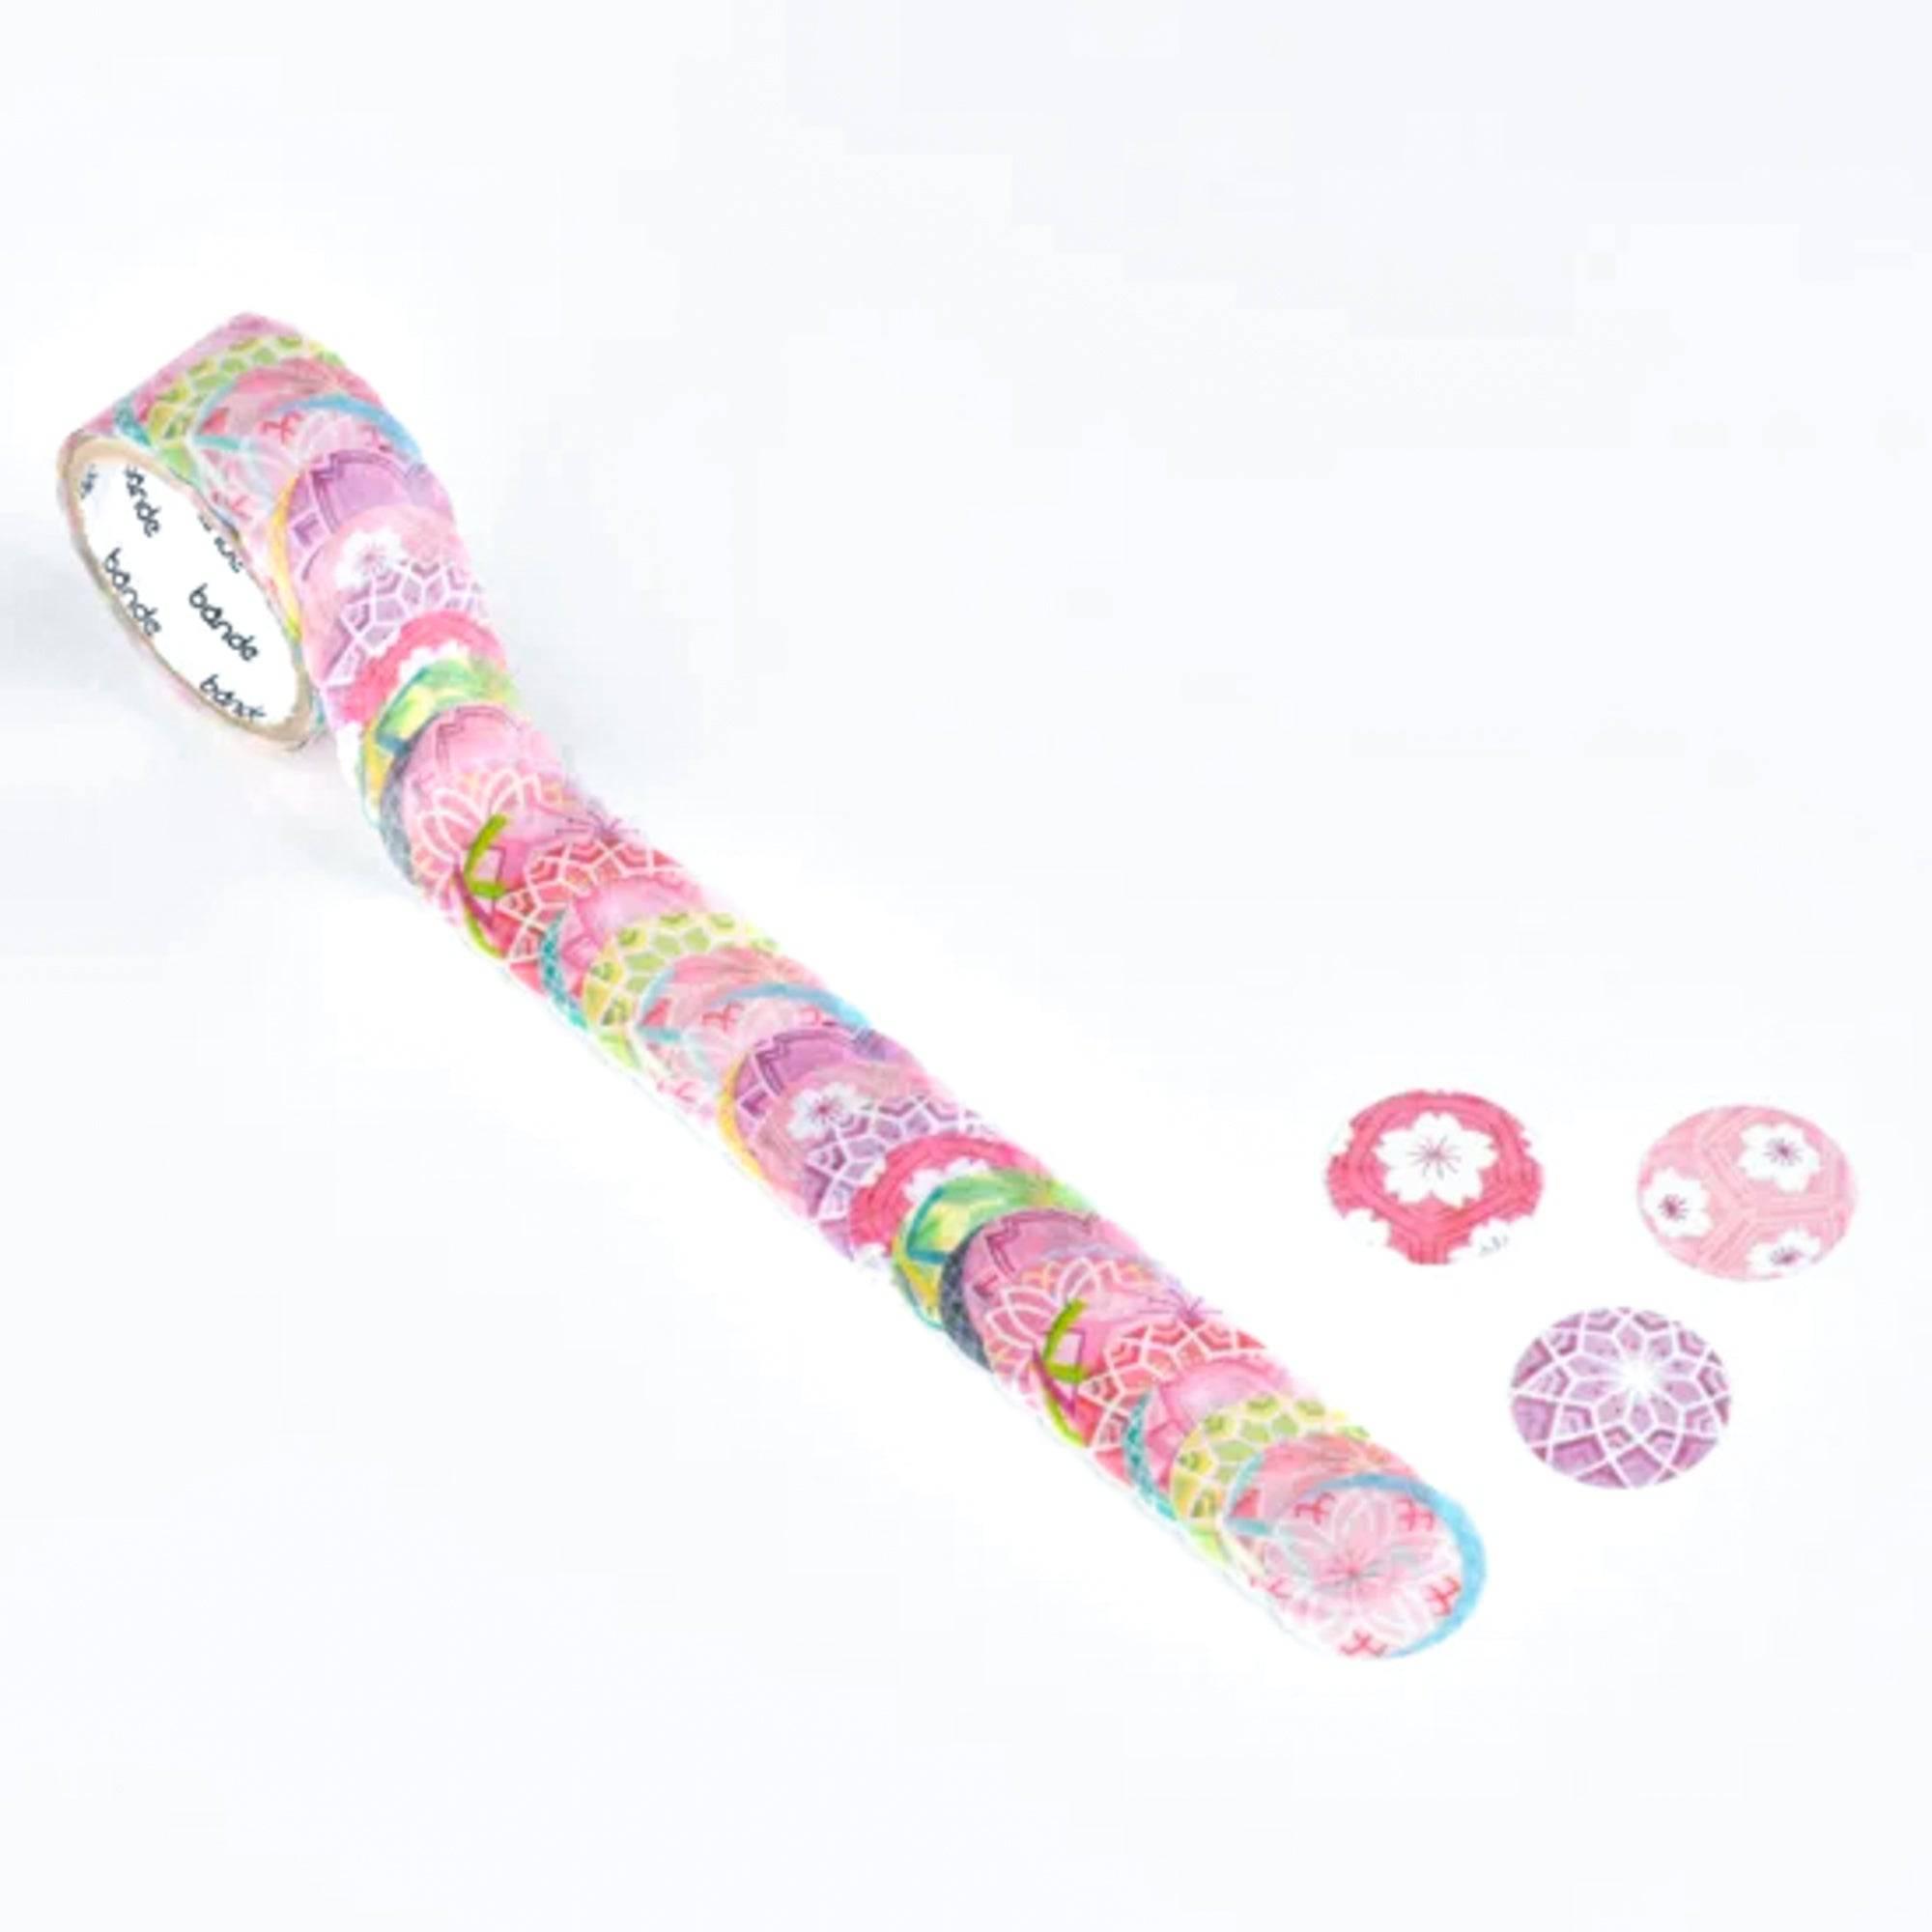 Light Pink Temari Washi Tape Sticker Roll - Bande - Komorebi Stationery